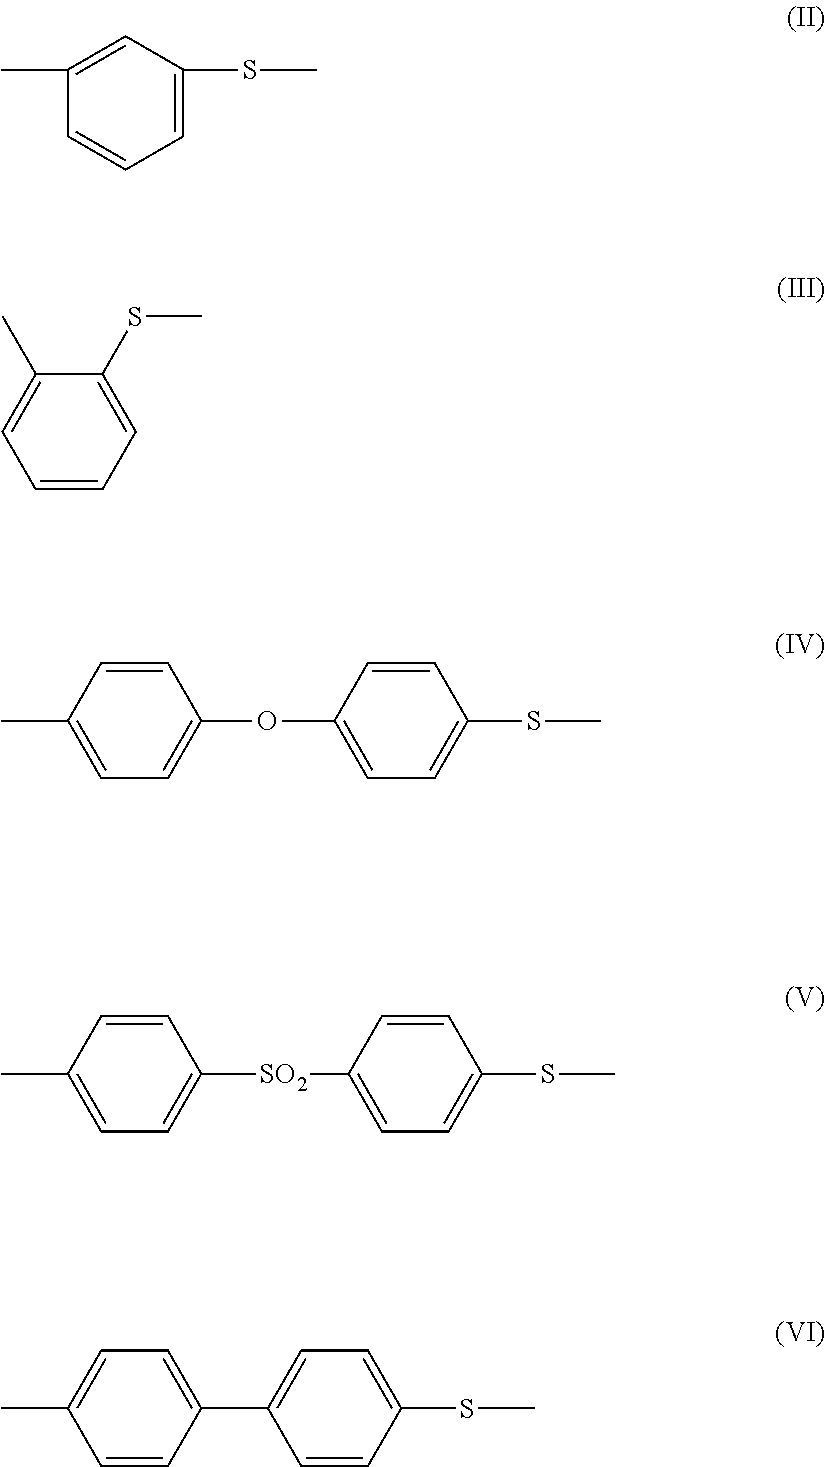 Polyamide resin composition